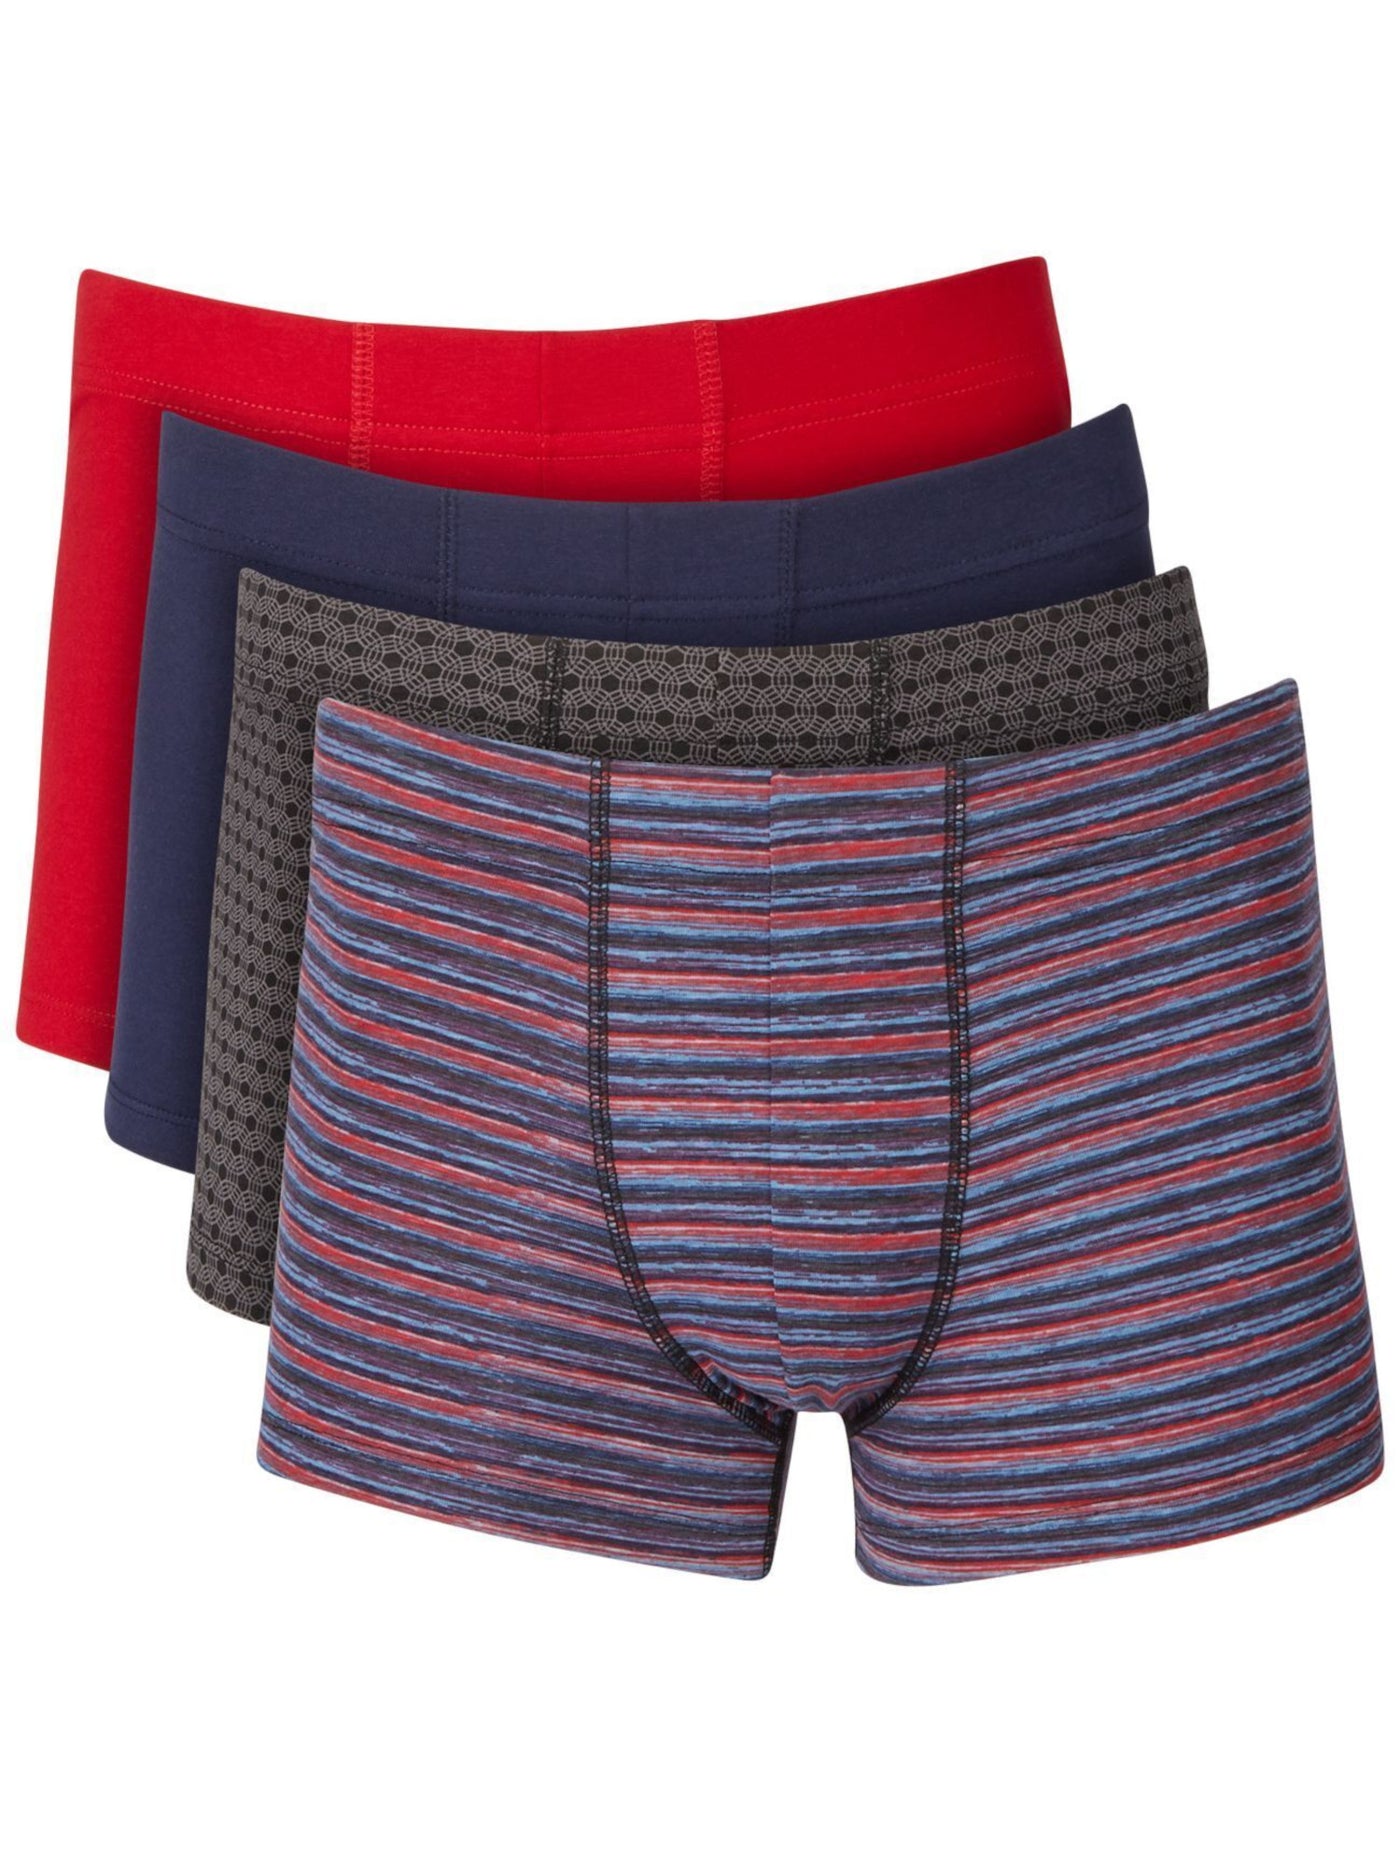 ALFANI Intimates Red Trunk Underwear S